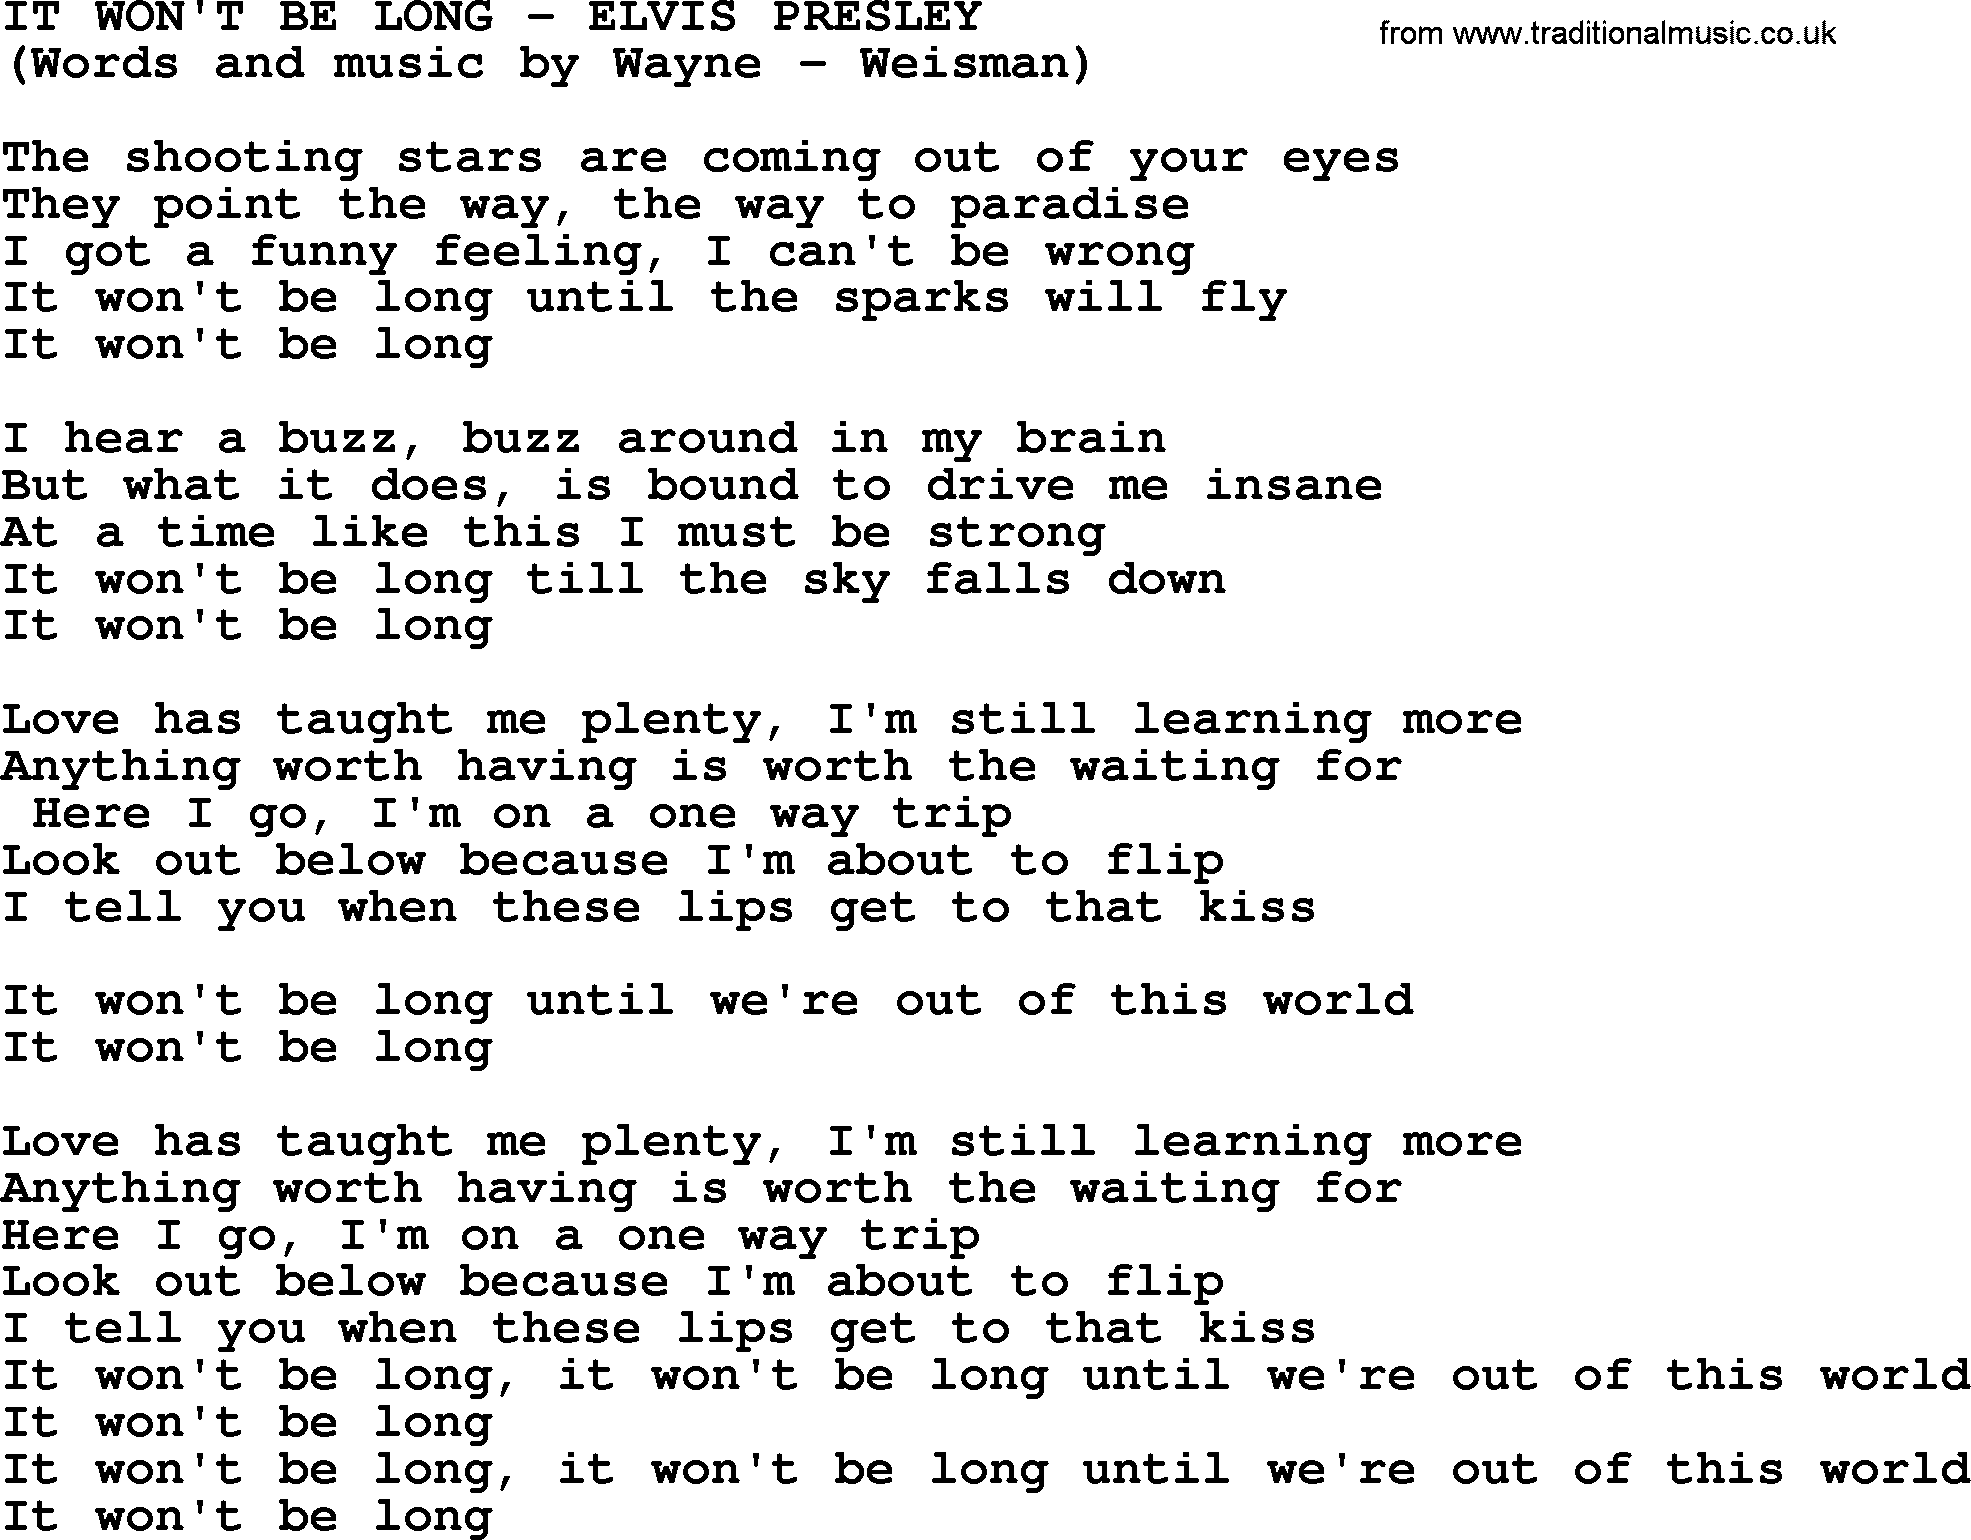 Elvis Presley song: It Won't Be Long lyrics